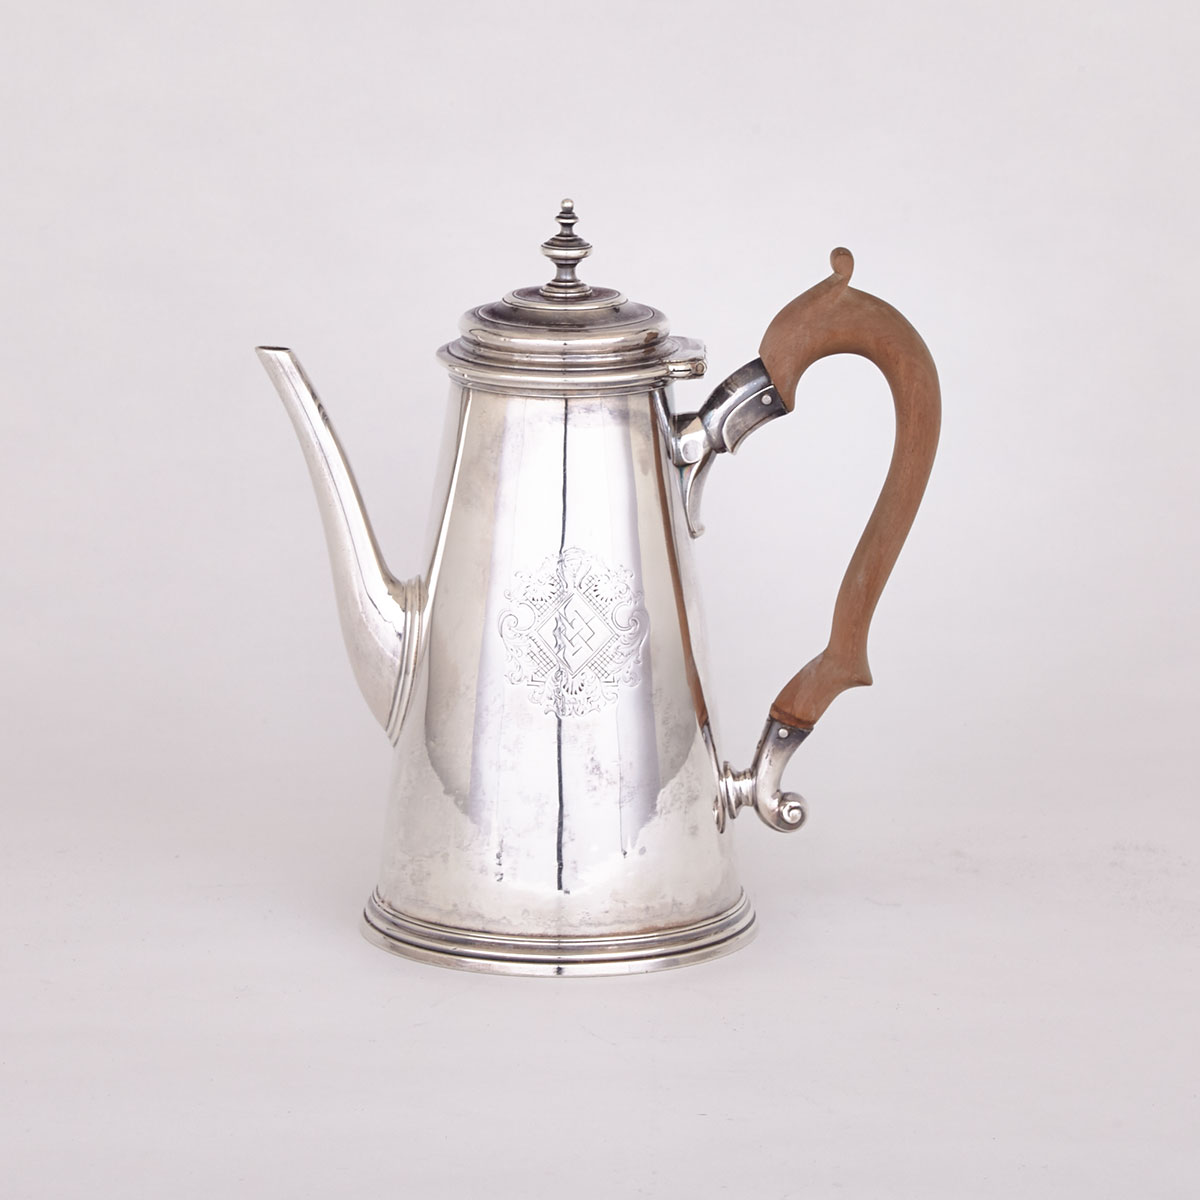 George II Silver Coffee Pot, Elizabeth Godfrey, London, 1747